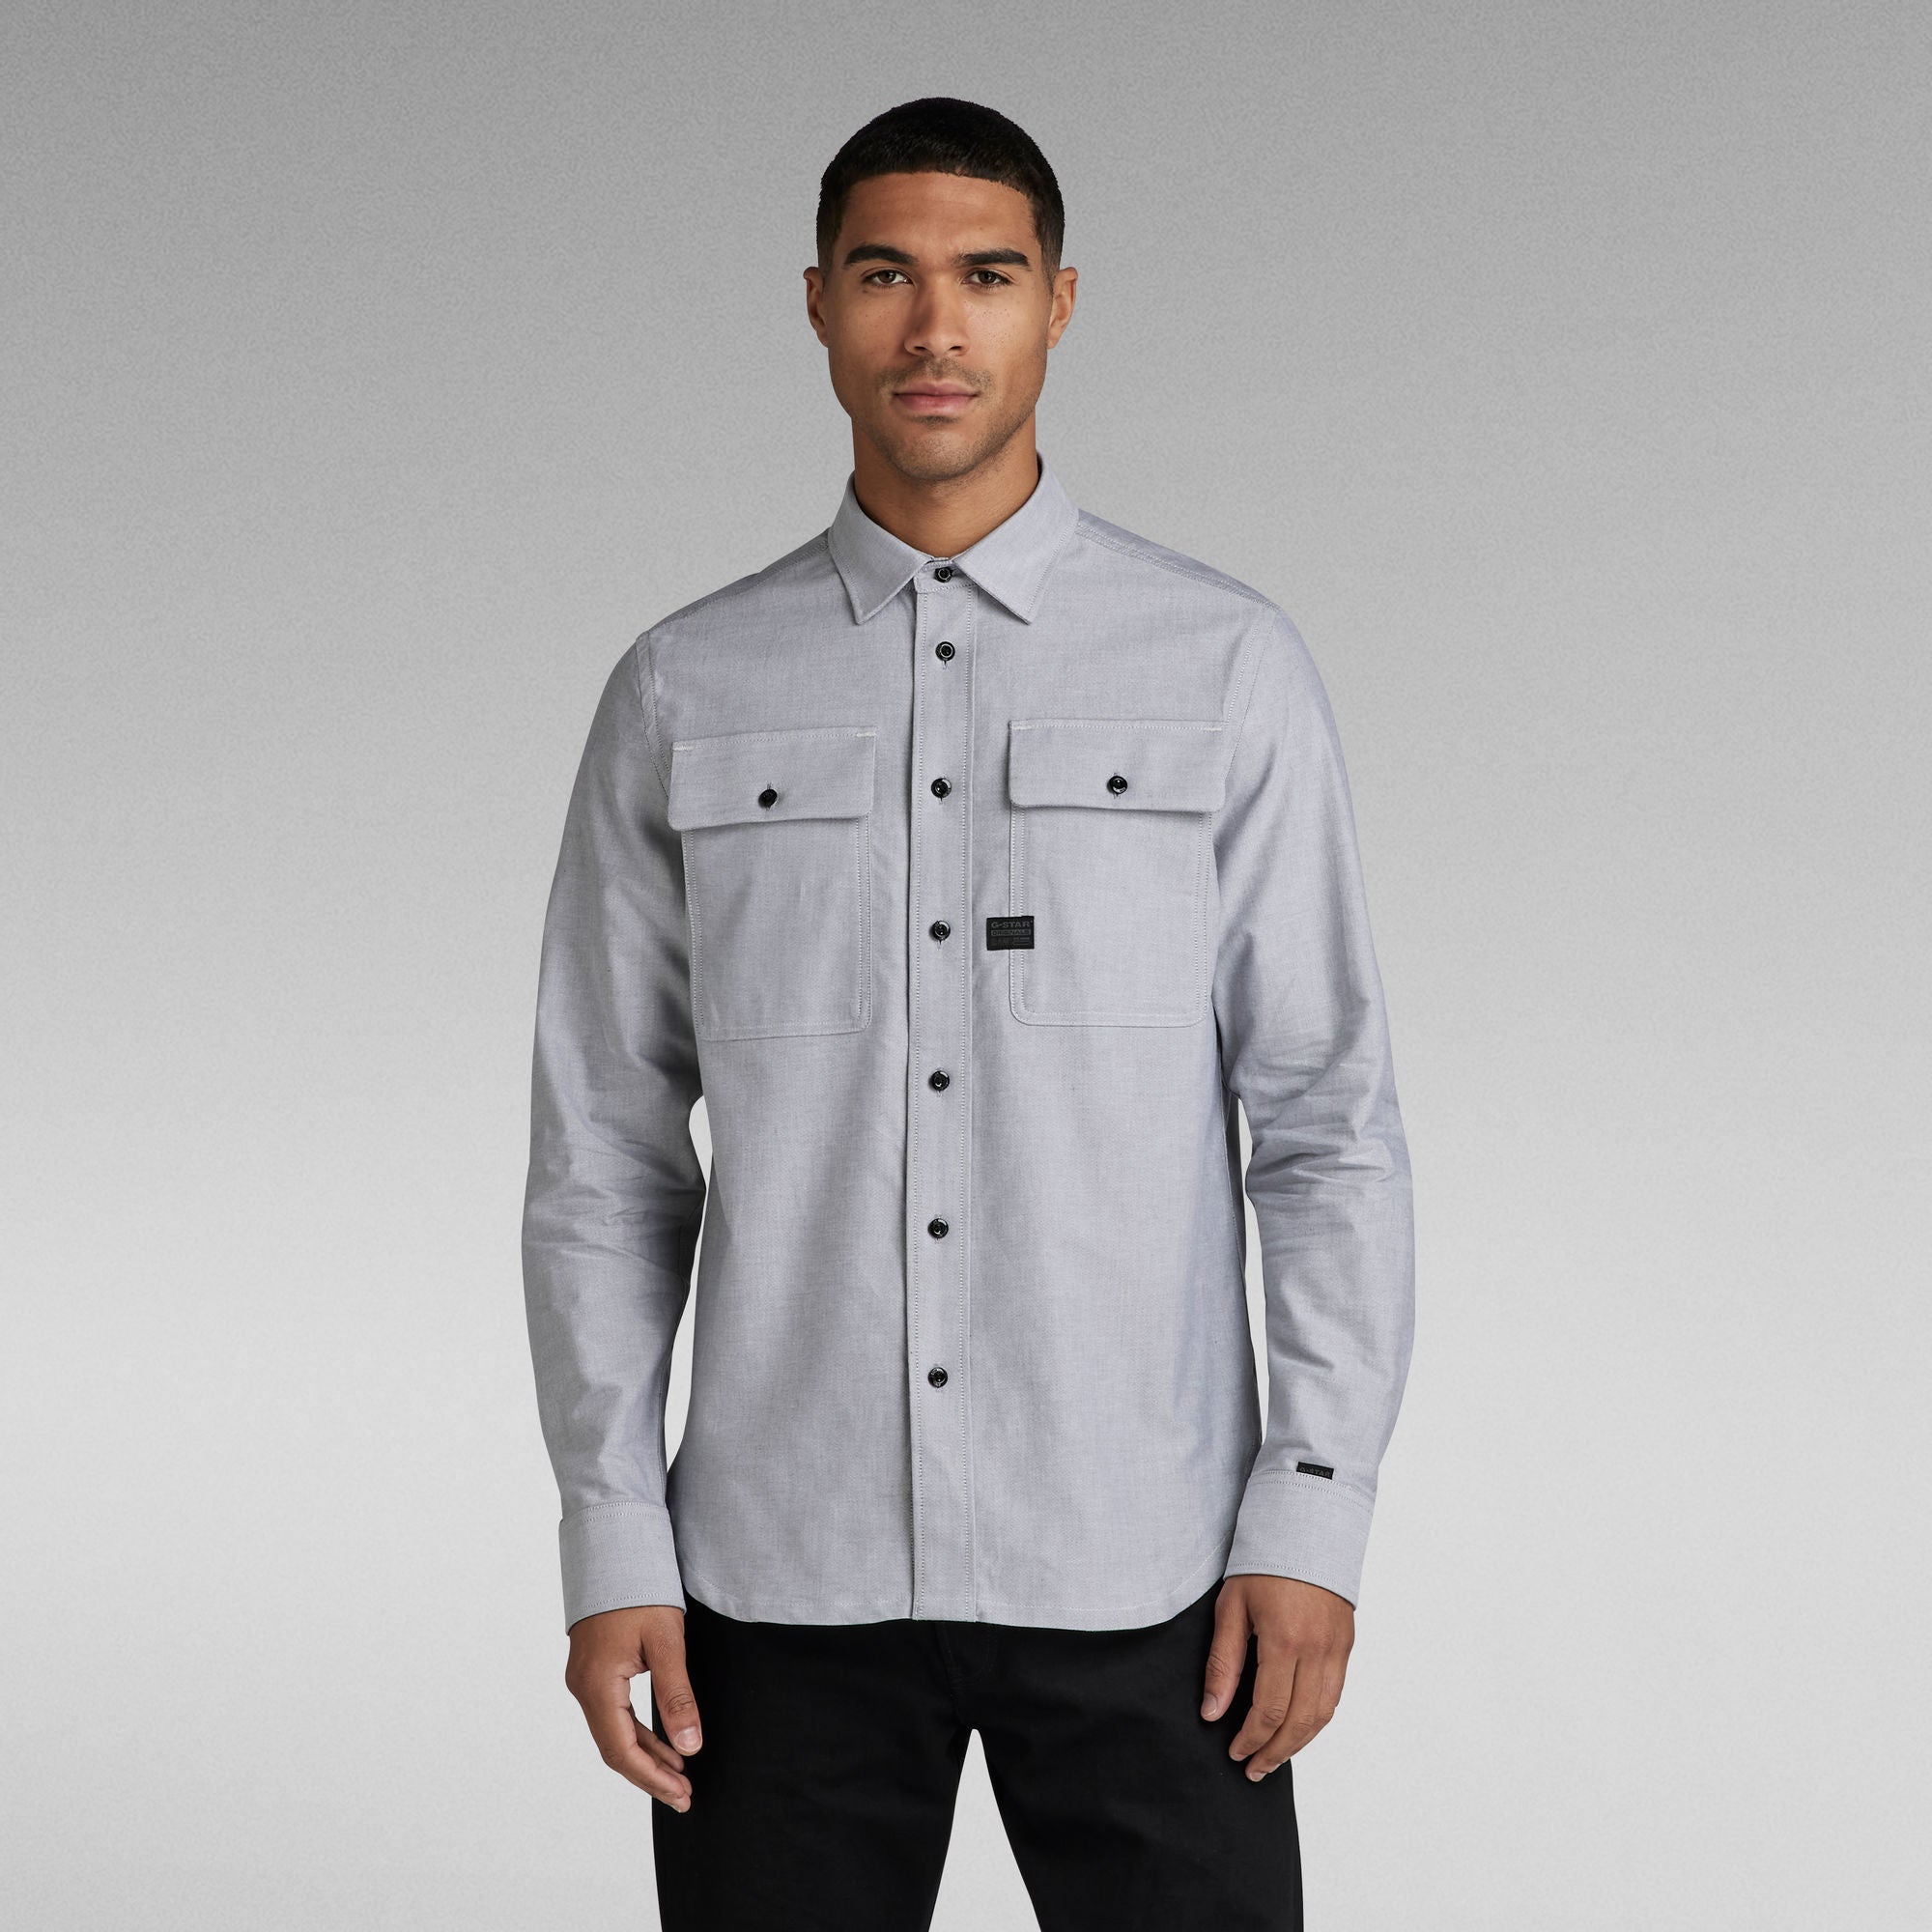 G-Star Raw - CPO Regular LS Shirt - Correct Grey/White Oxford